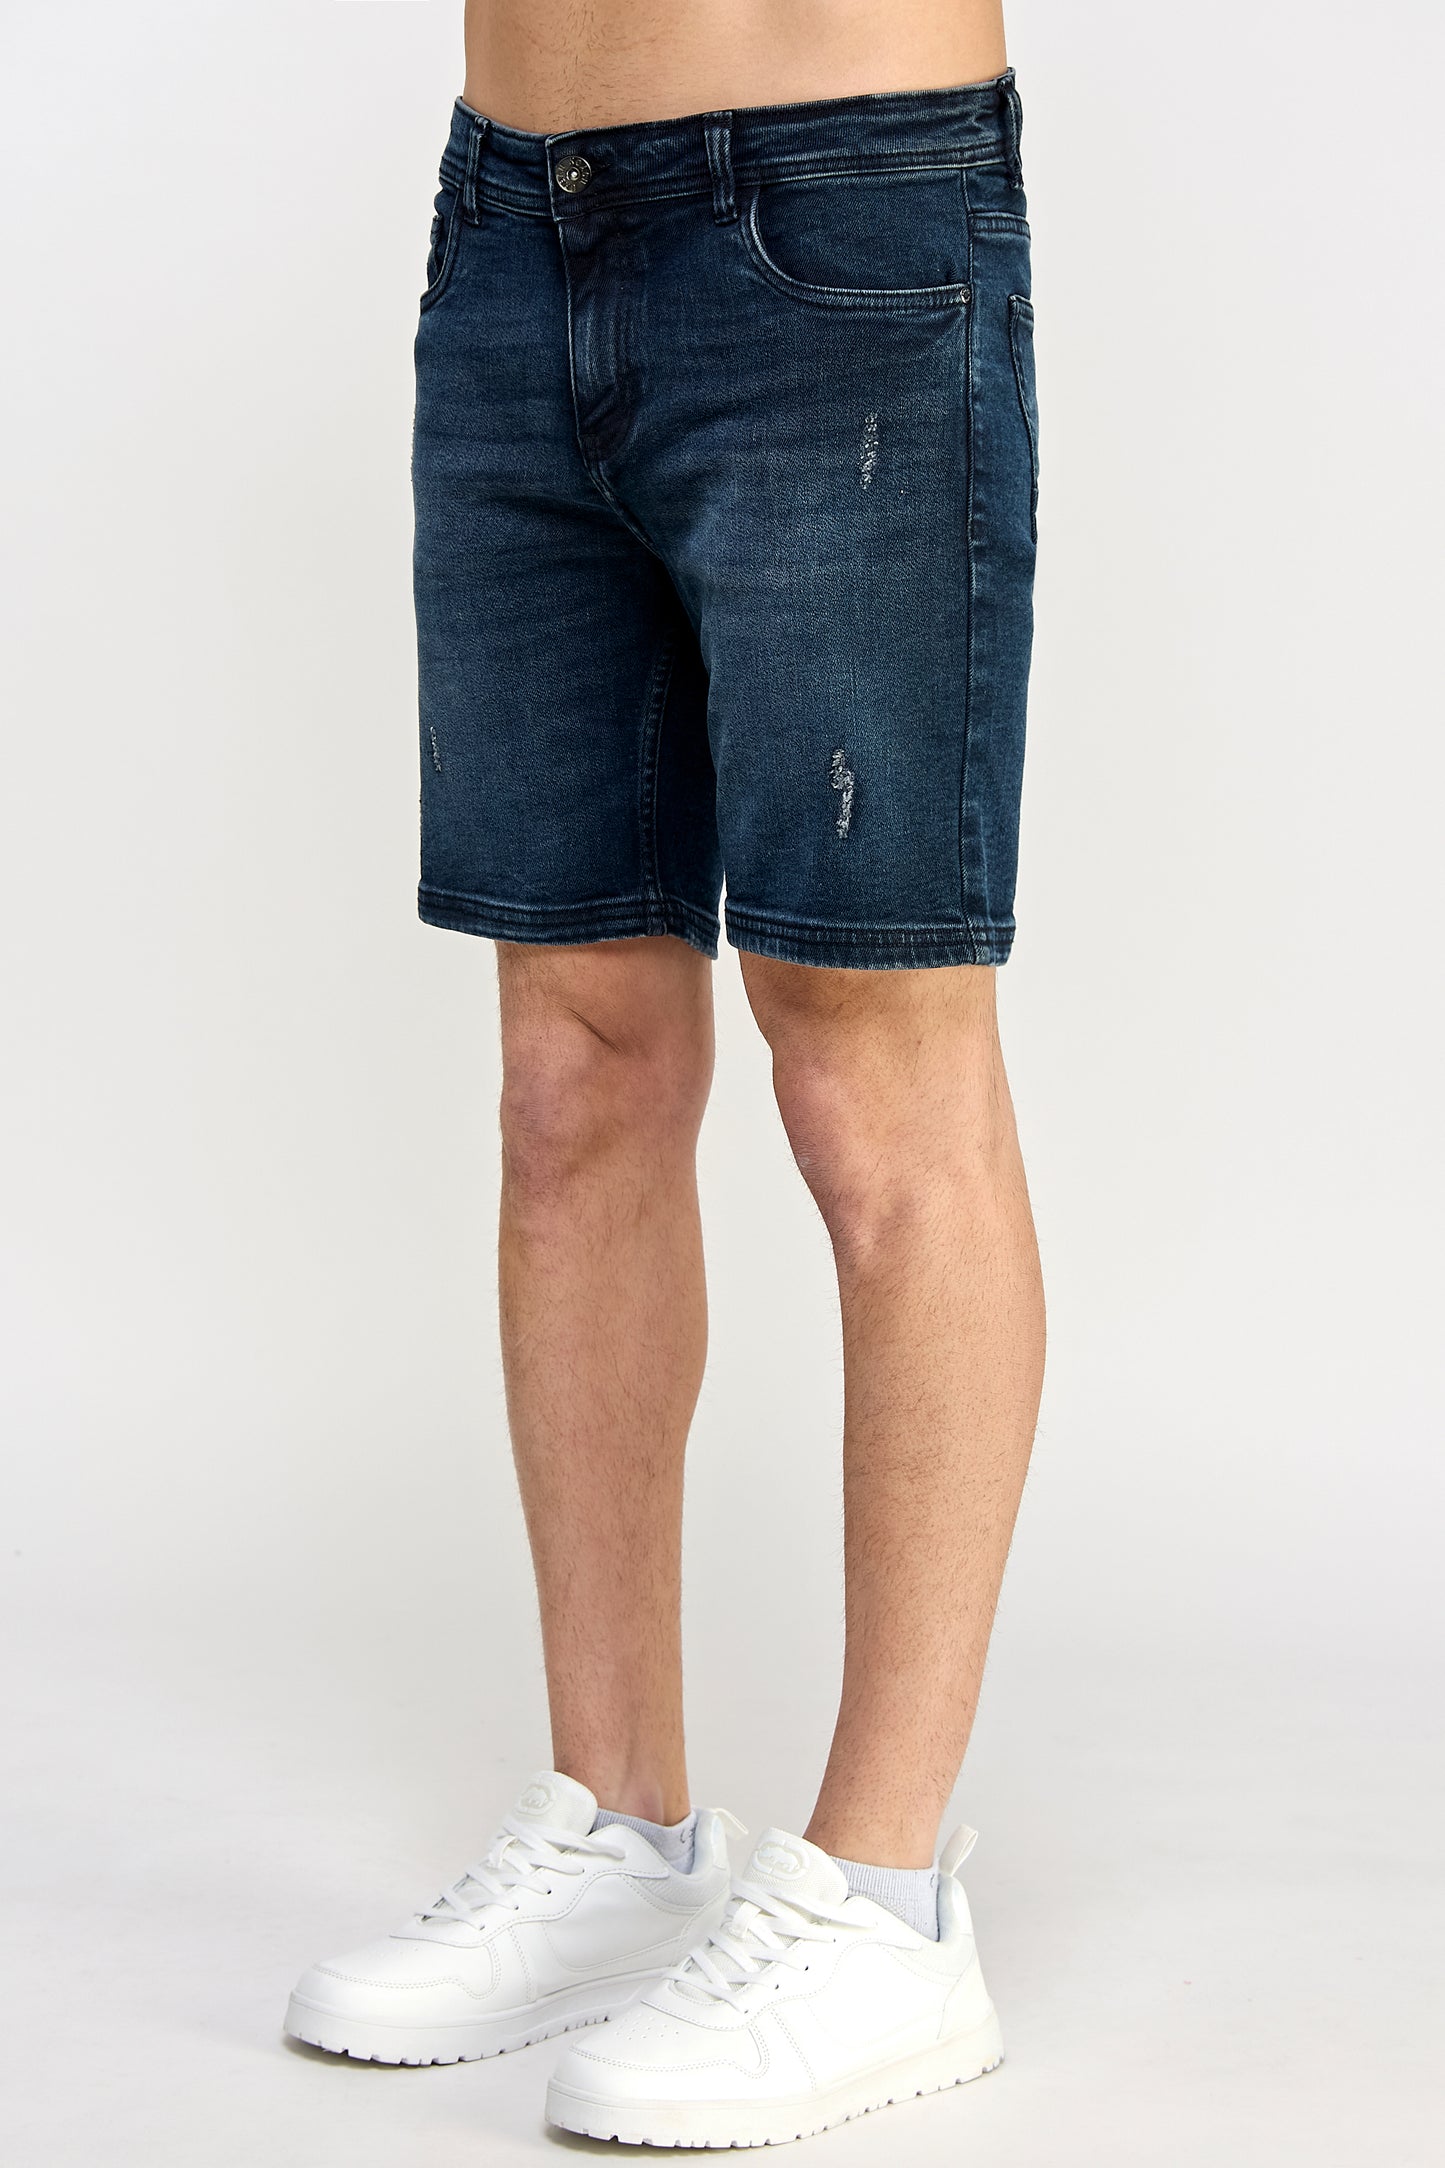 Indigo Denim Shorts